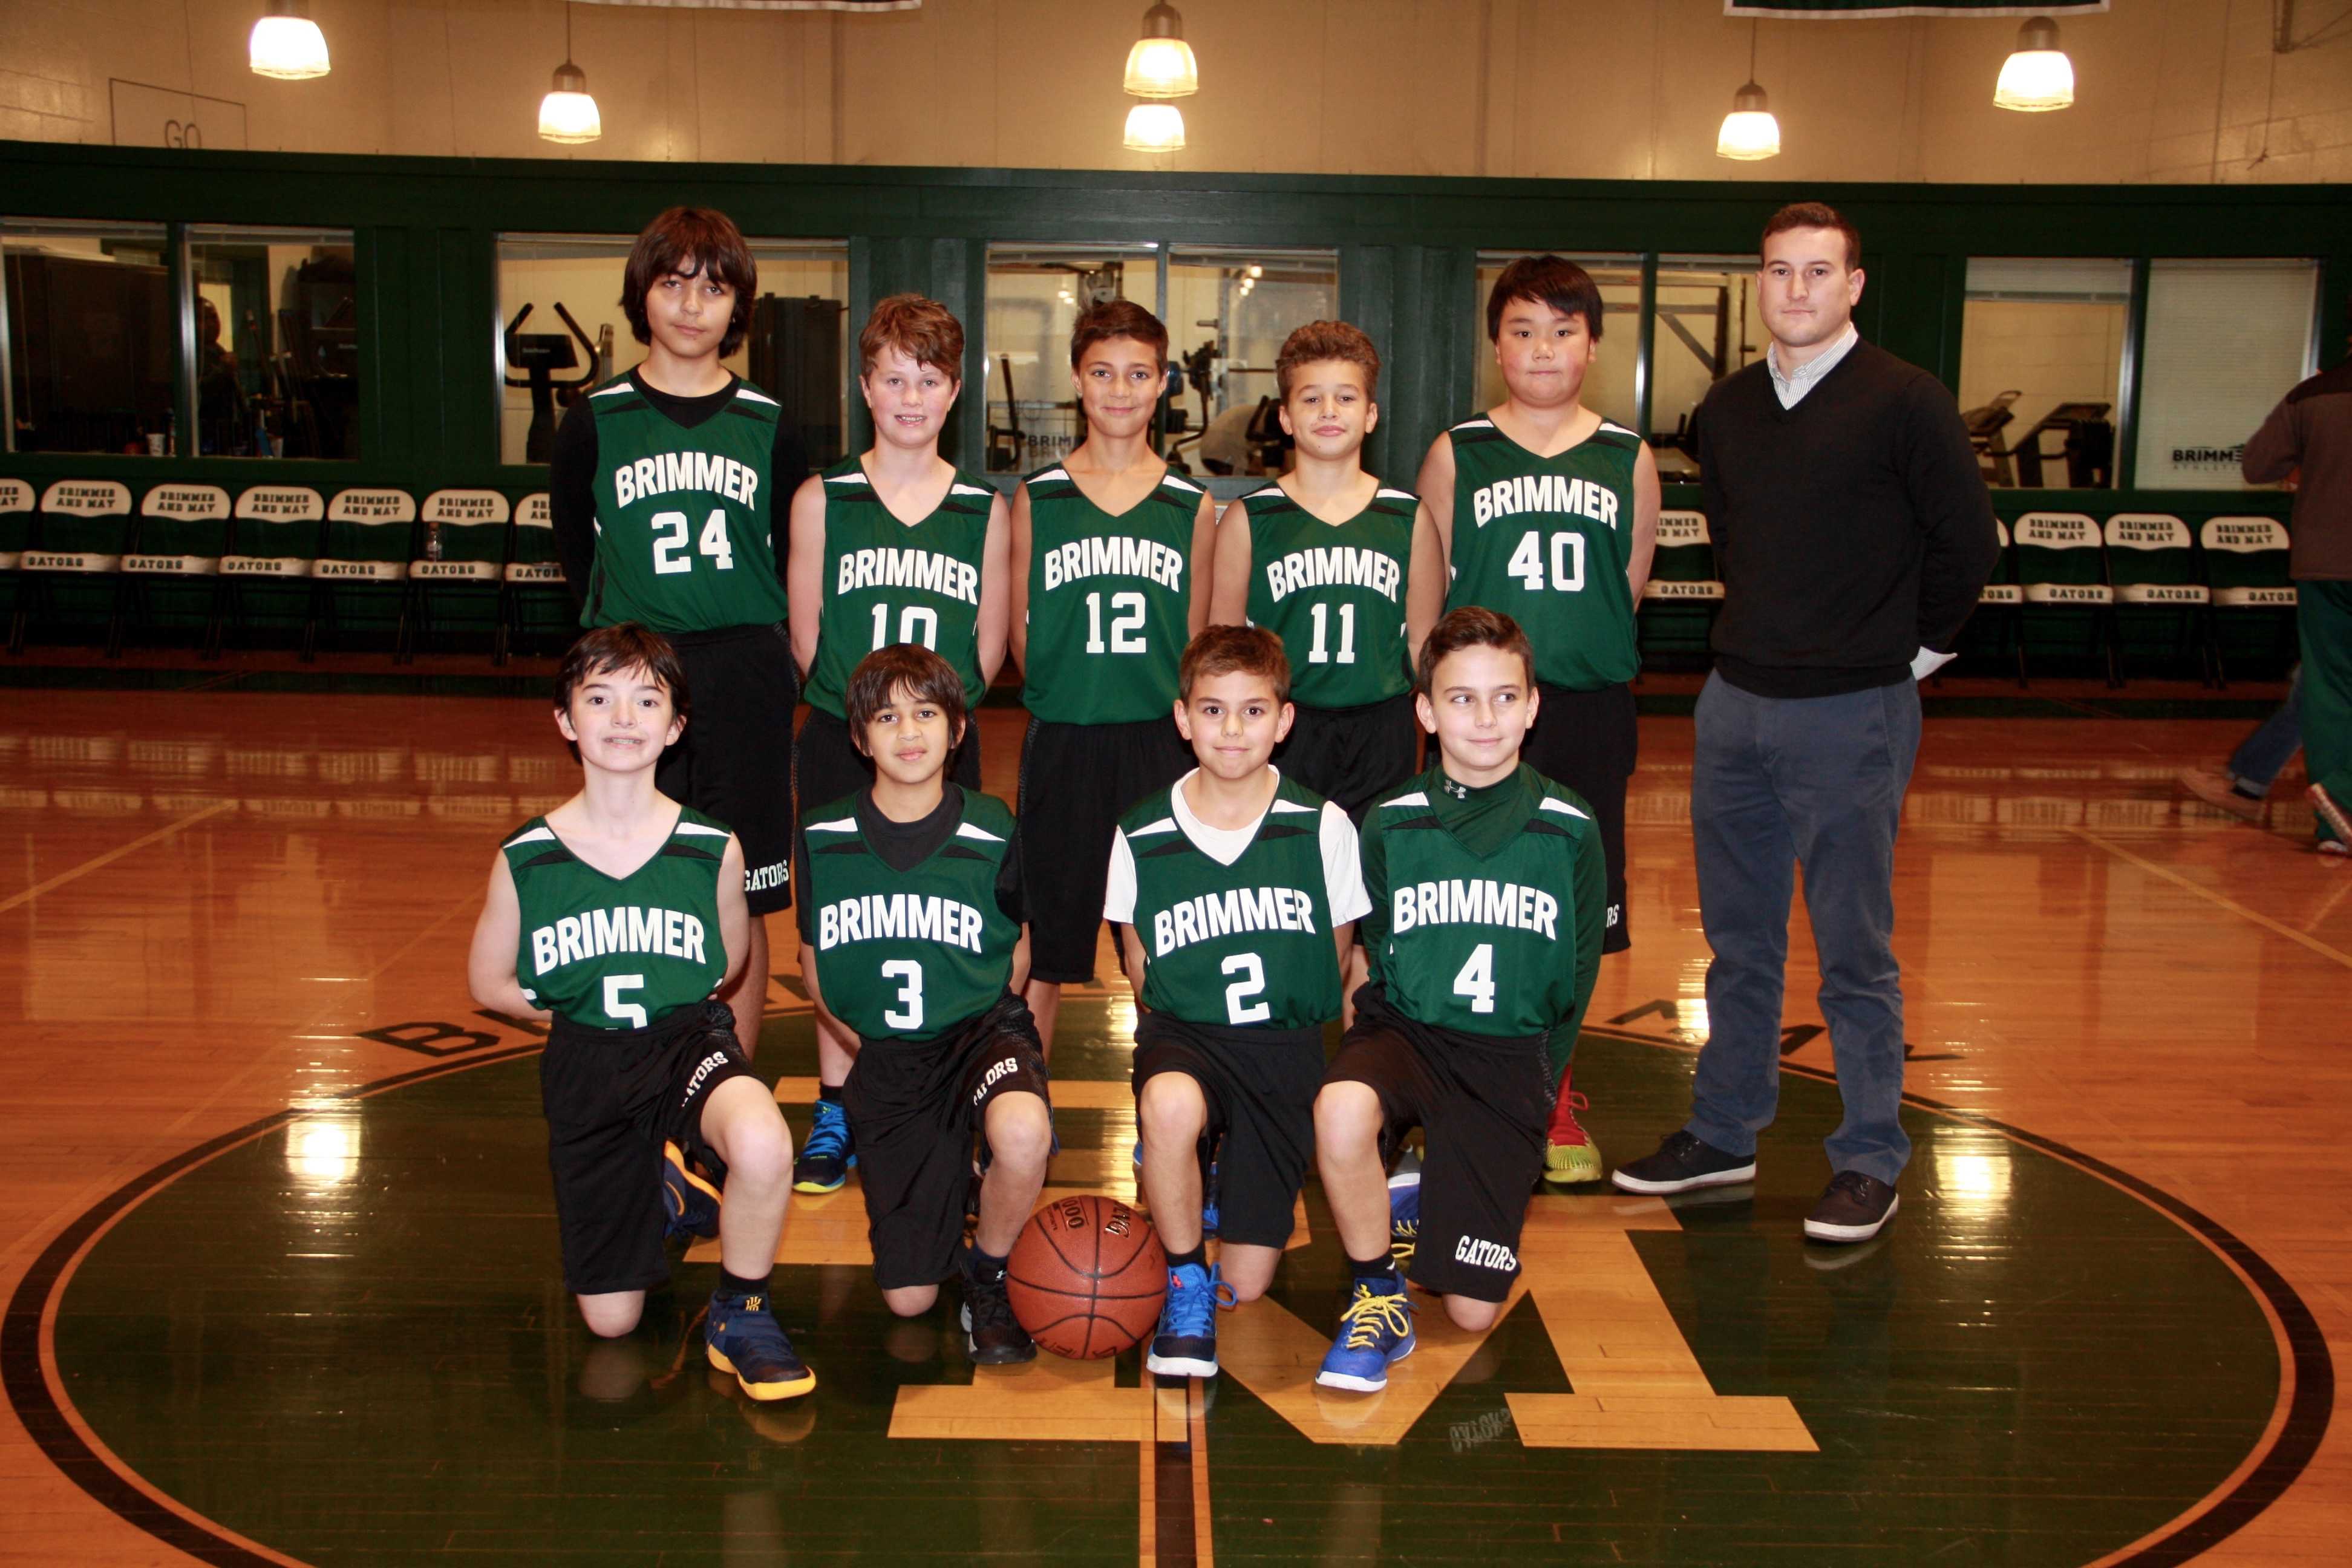 6th grade boys' team. Photo by Megan Clifford. 